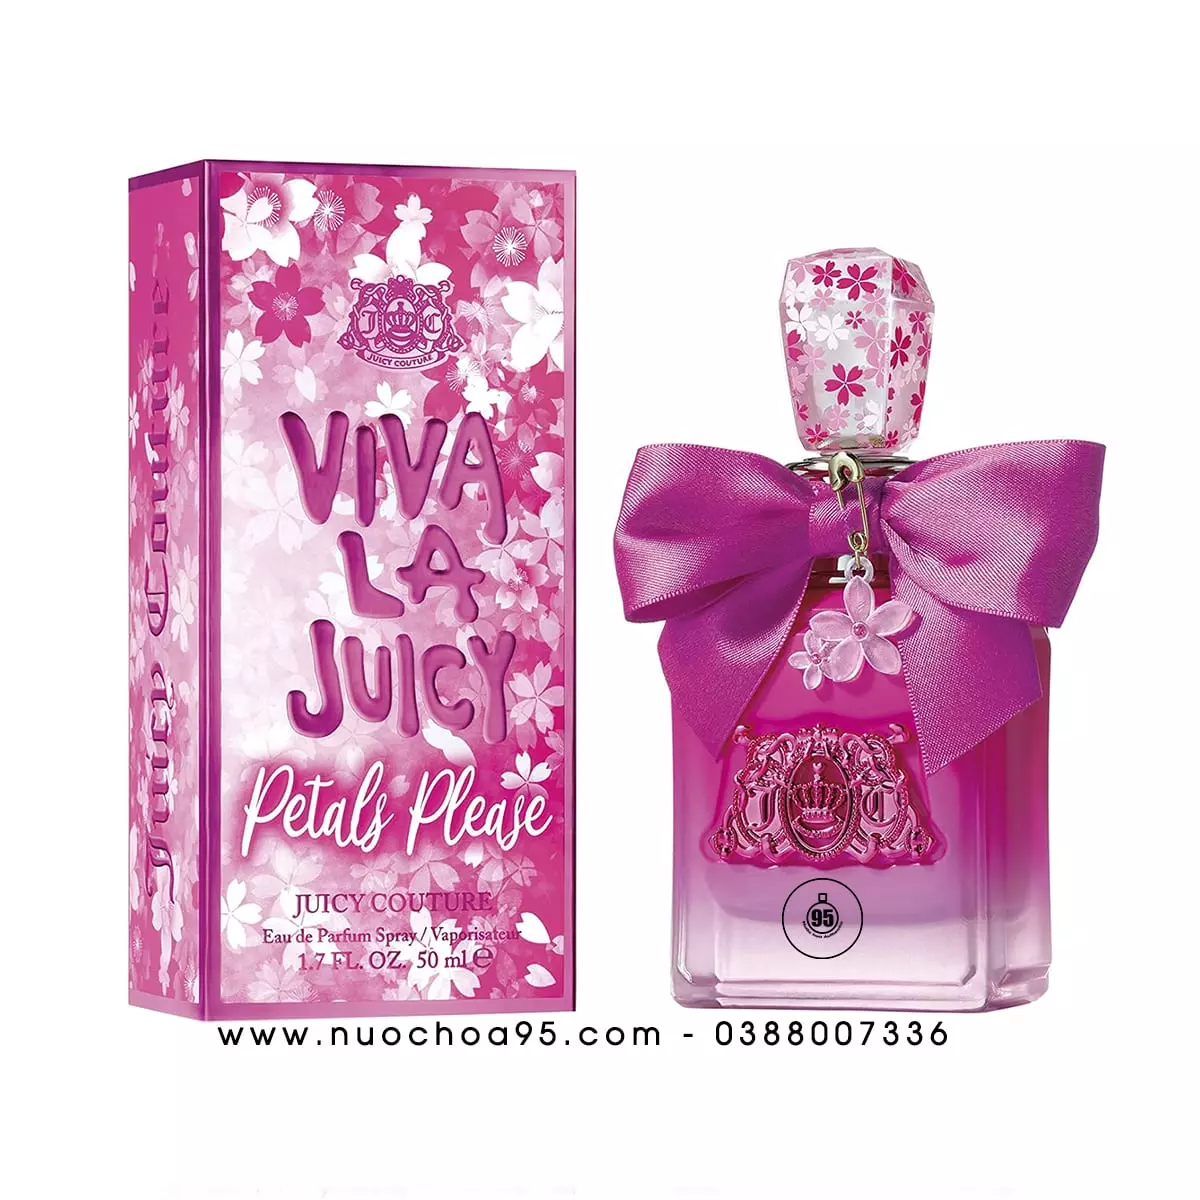 Nước hoa Juicy Couture Viva La Juicy Petals Please